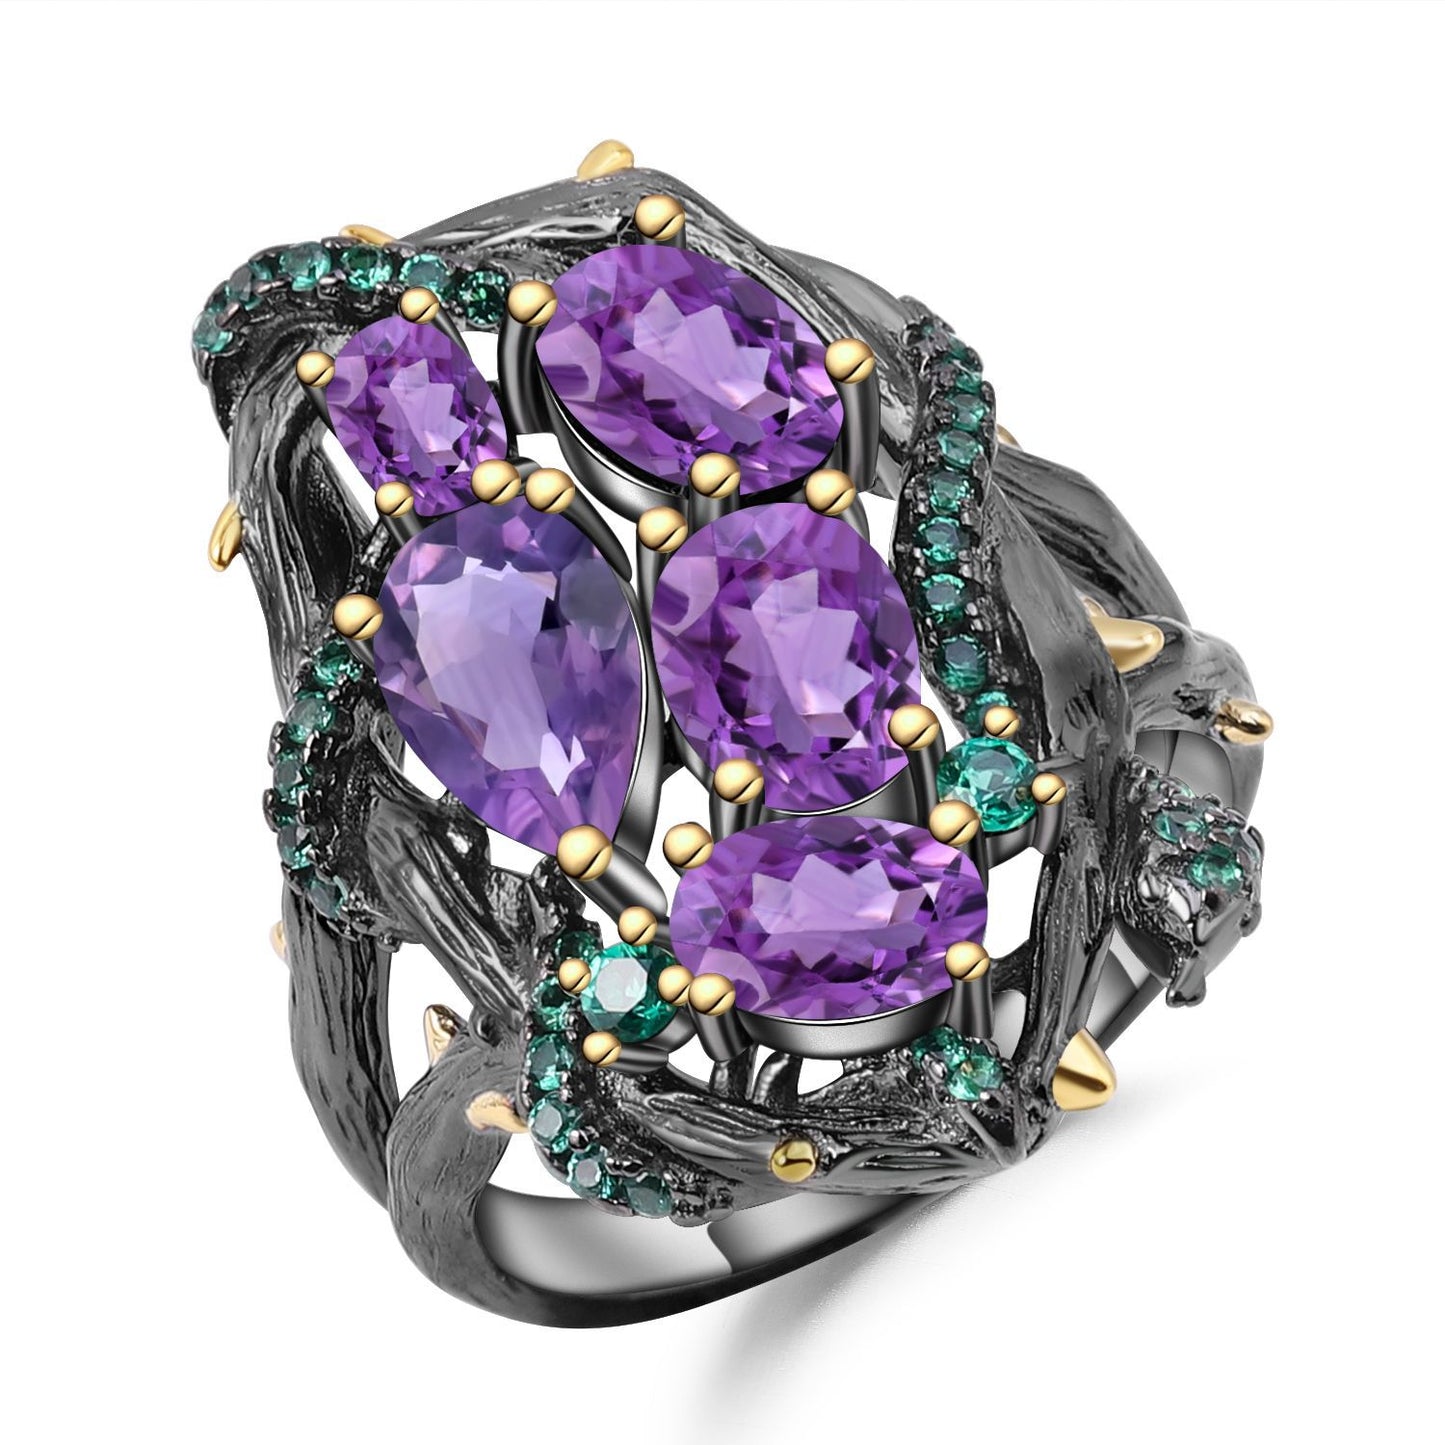 Italian Crafted Gemstone Ring